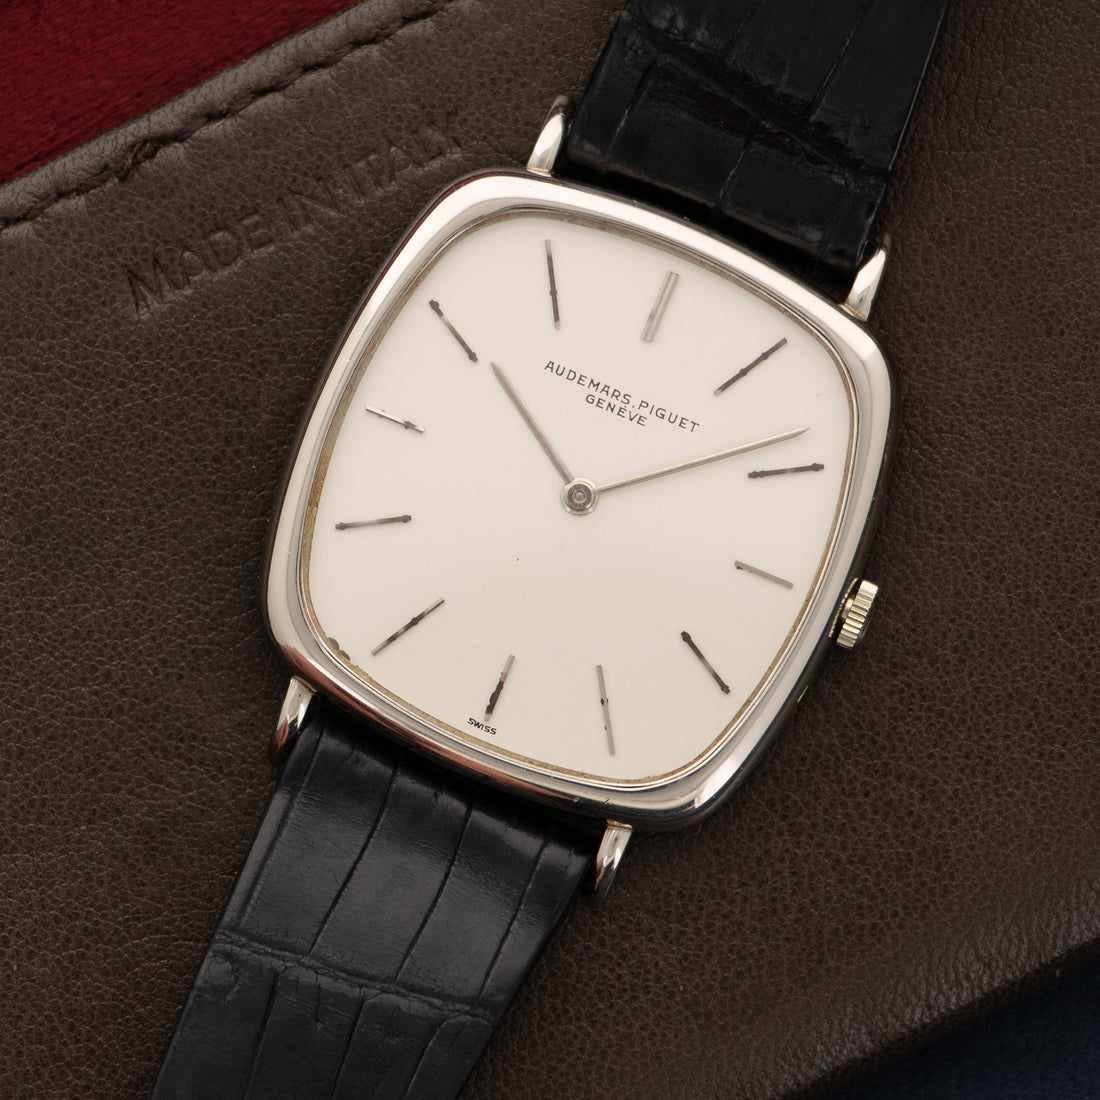 Audemars Piguet White Gold Cushion-Shaped Watch